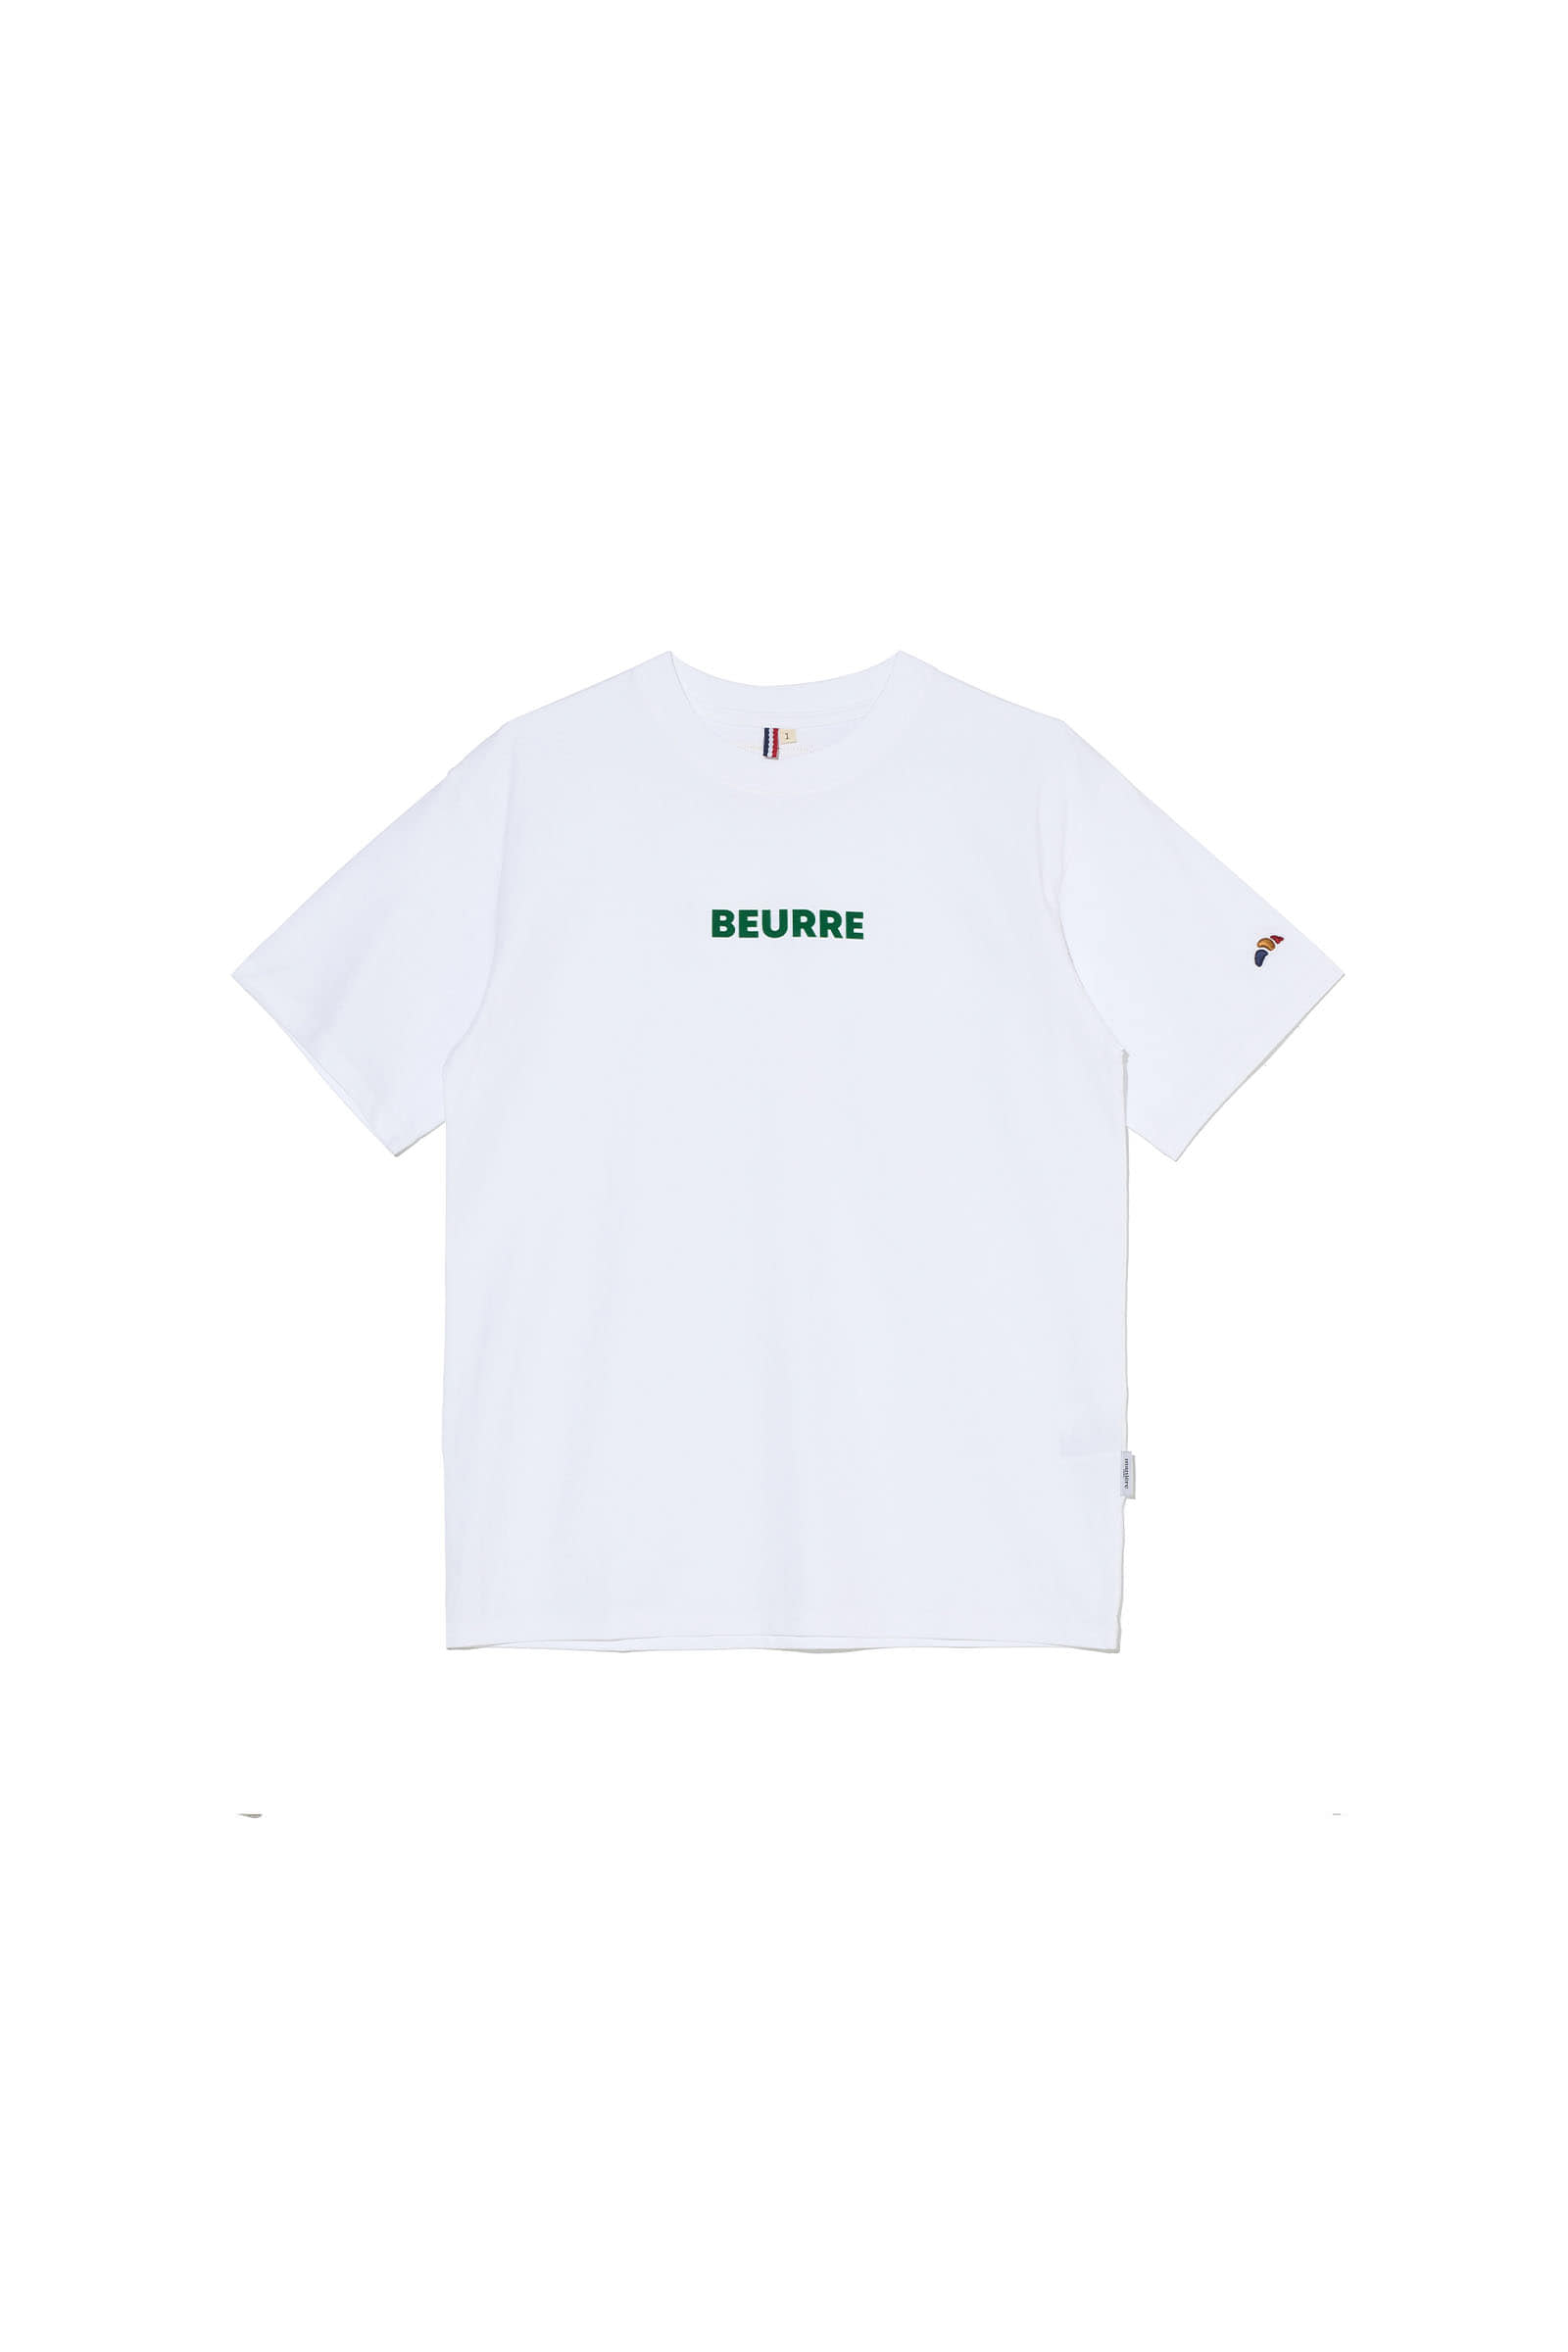 ep.6 BEURRE Mini T-shirts (White)